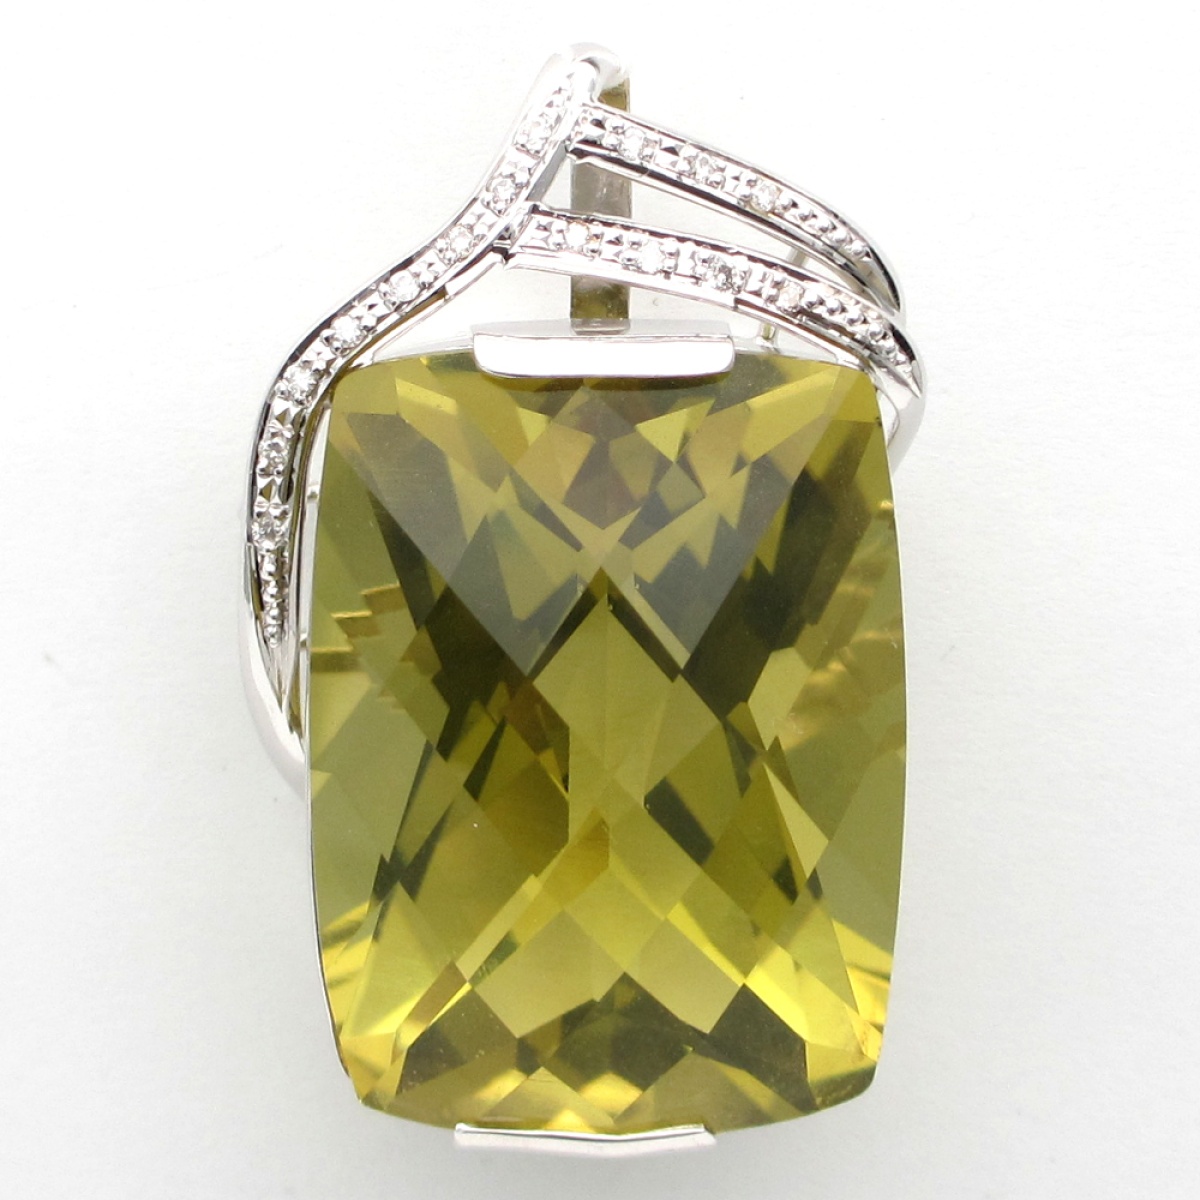 K18WG ホワイト ゴールド クオーツ 66.016ct ダイヤモンド 0.12ct 